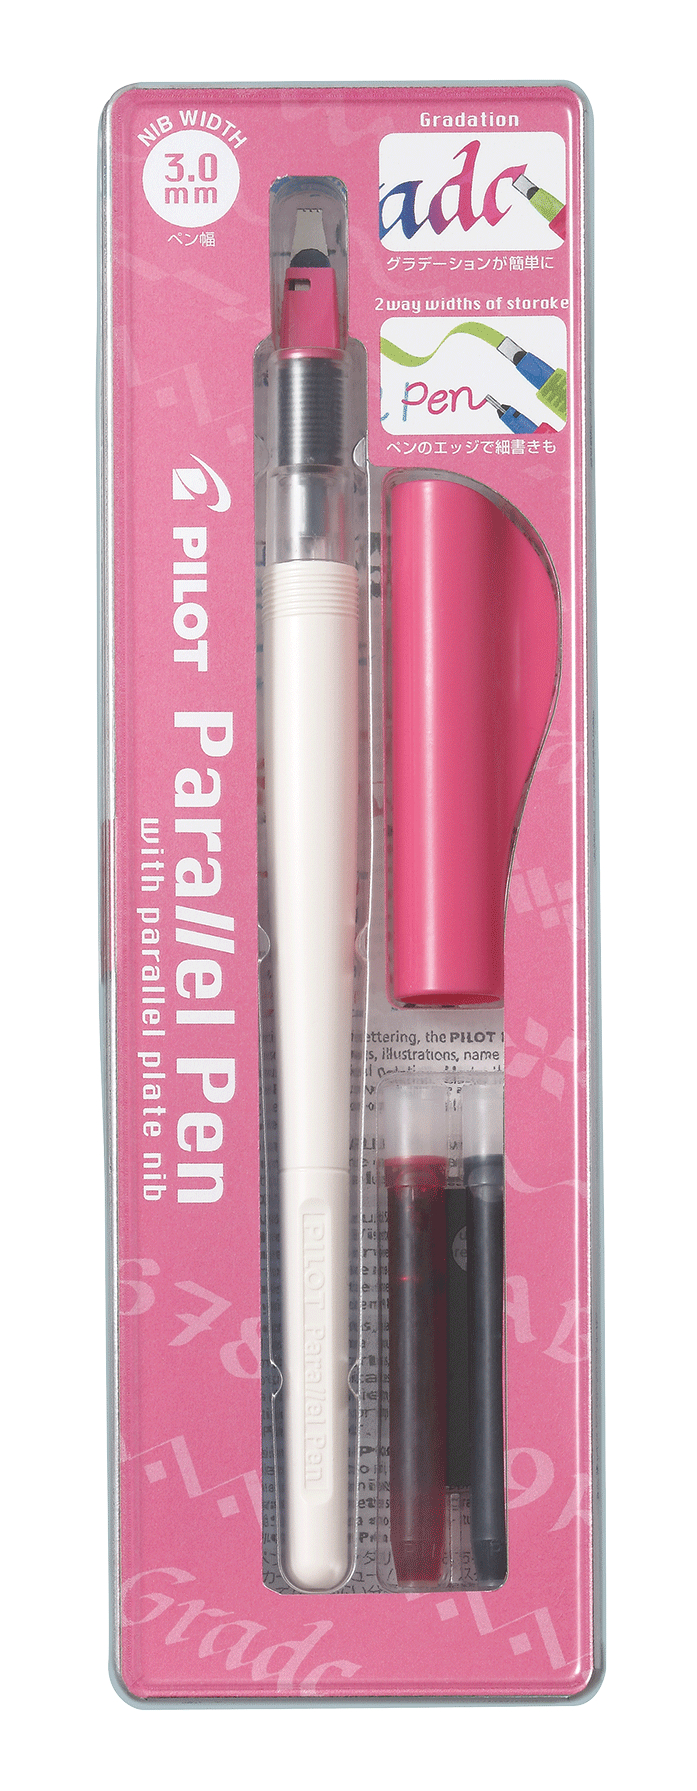 PILOT Calligraphie au stylo plume PFJ579561 Parallel pen 3.0 rose